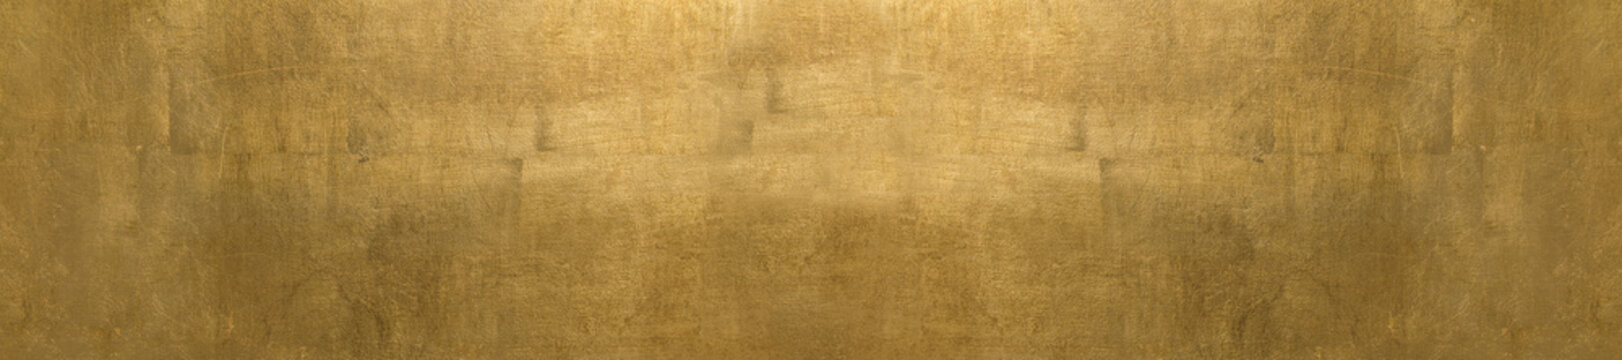 panorama  luxury background golden